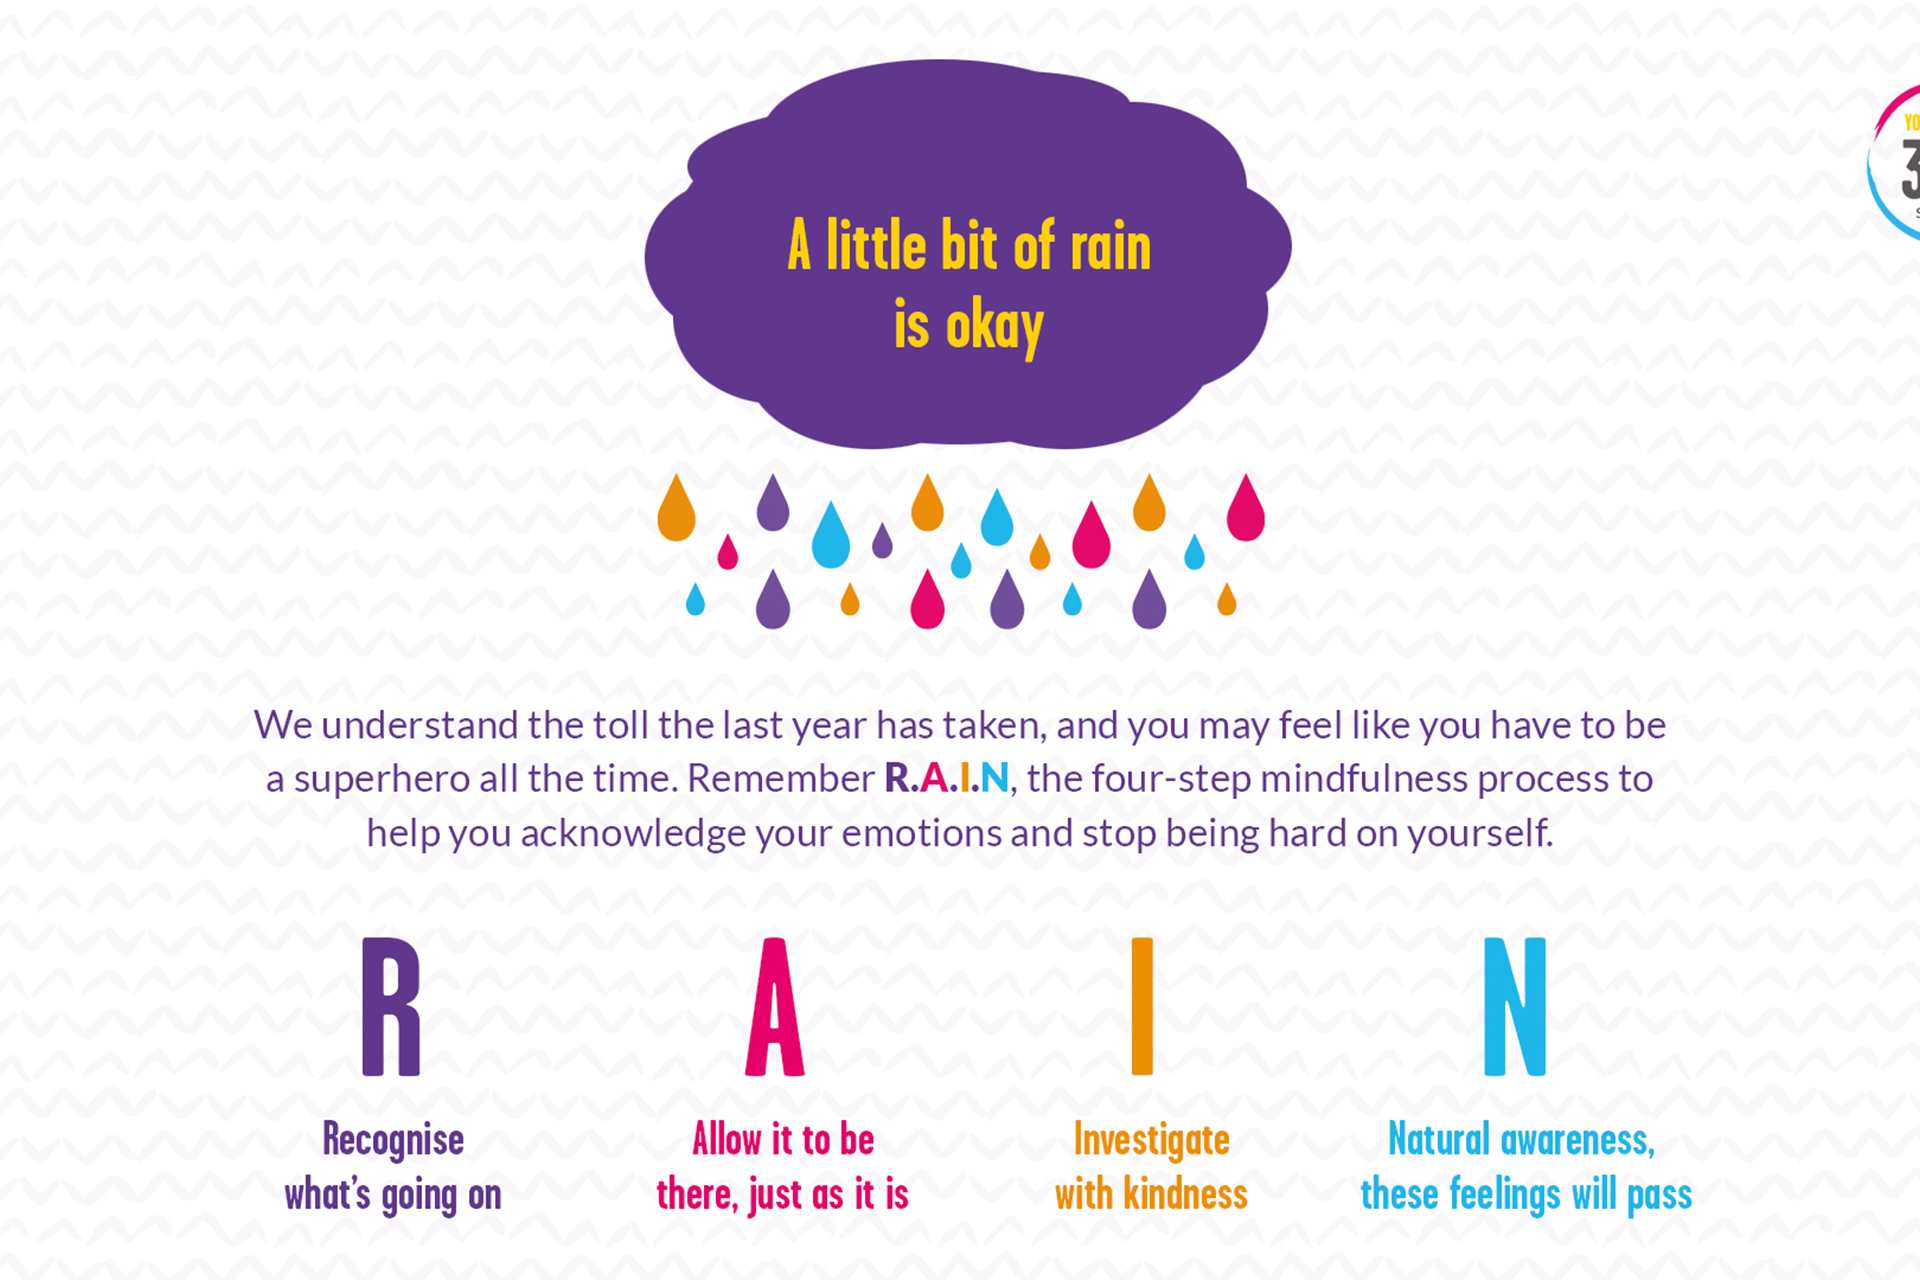 Our 'Rain' screensaver resource